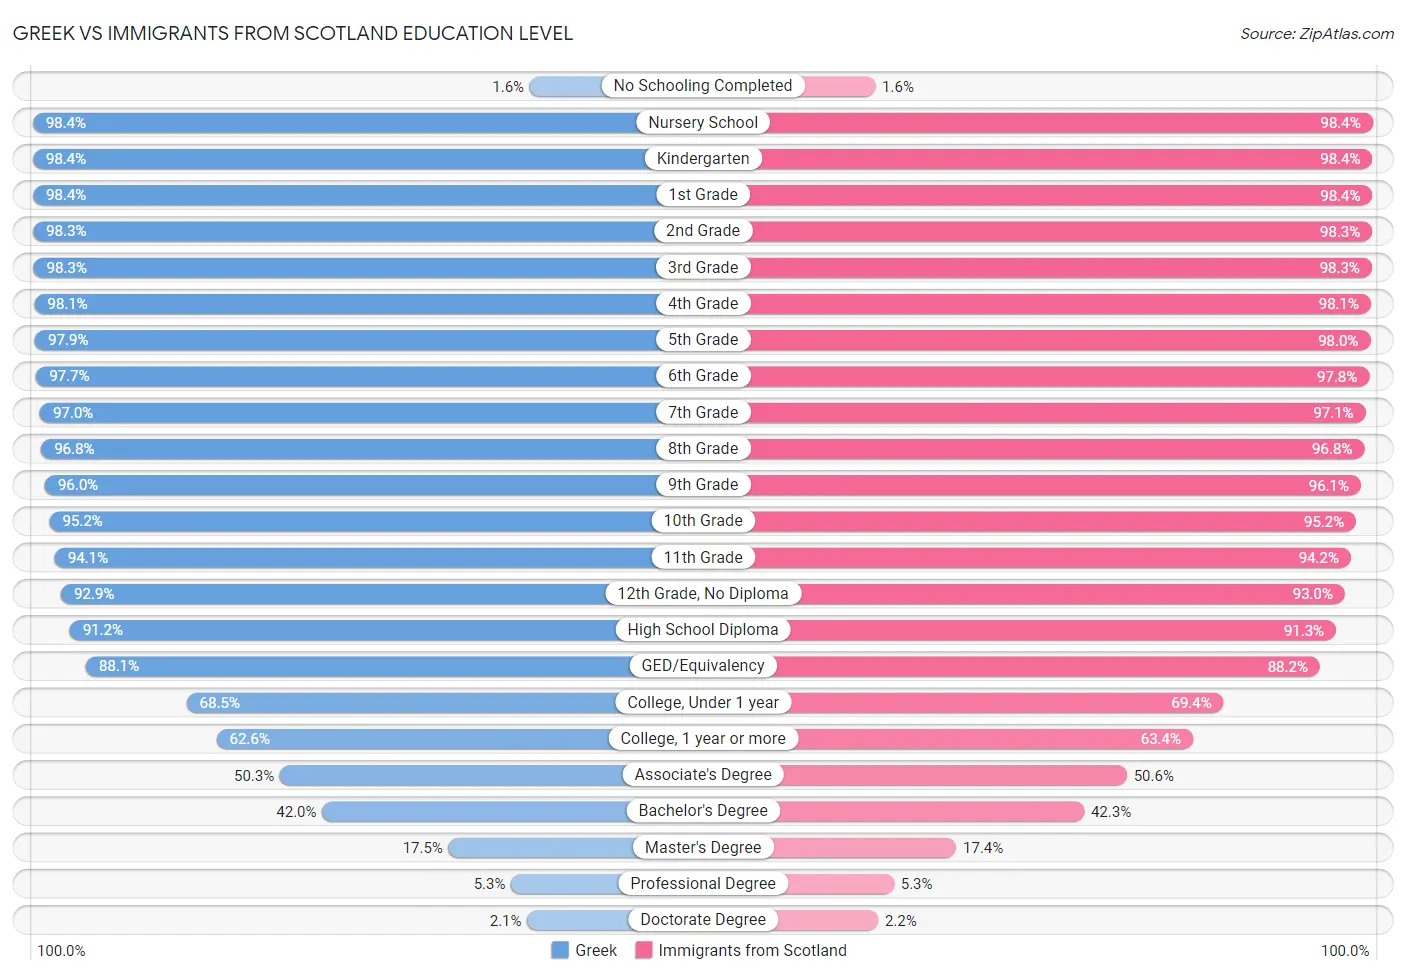 Greek vs Immigrants from Scotland Education Level